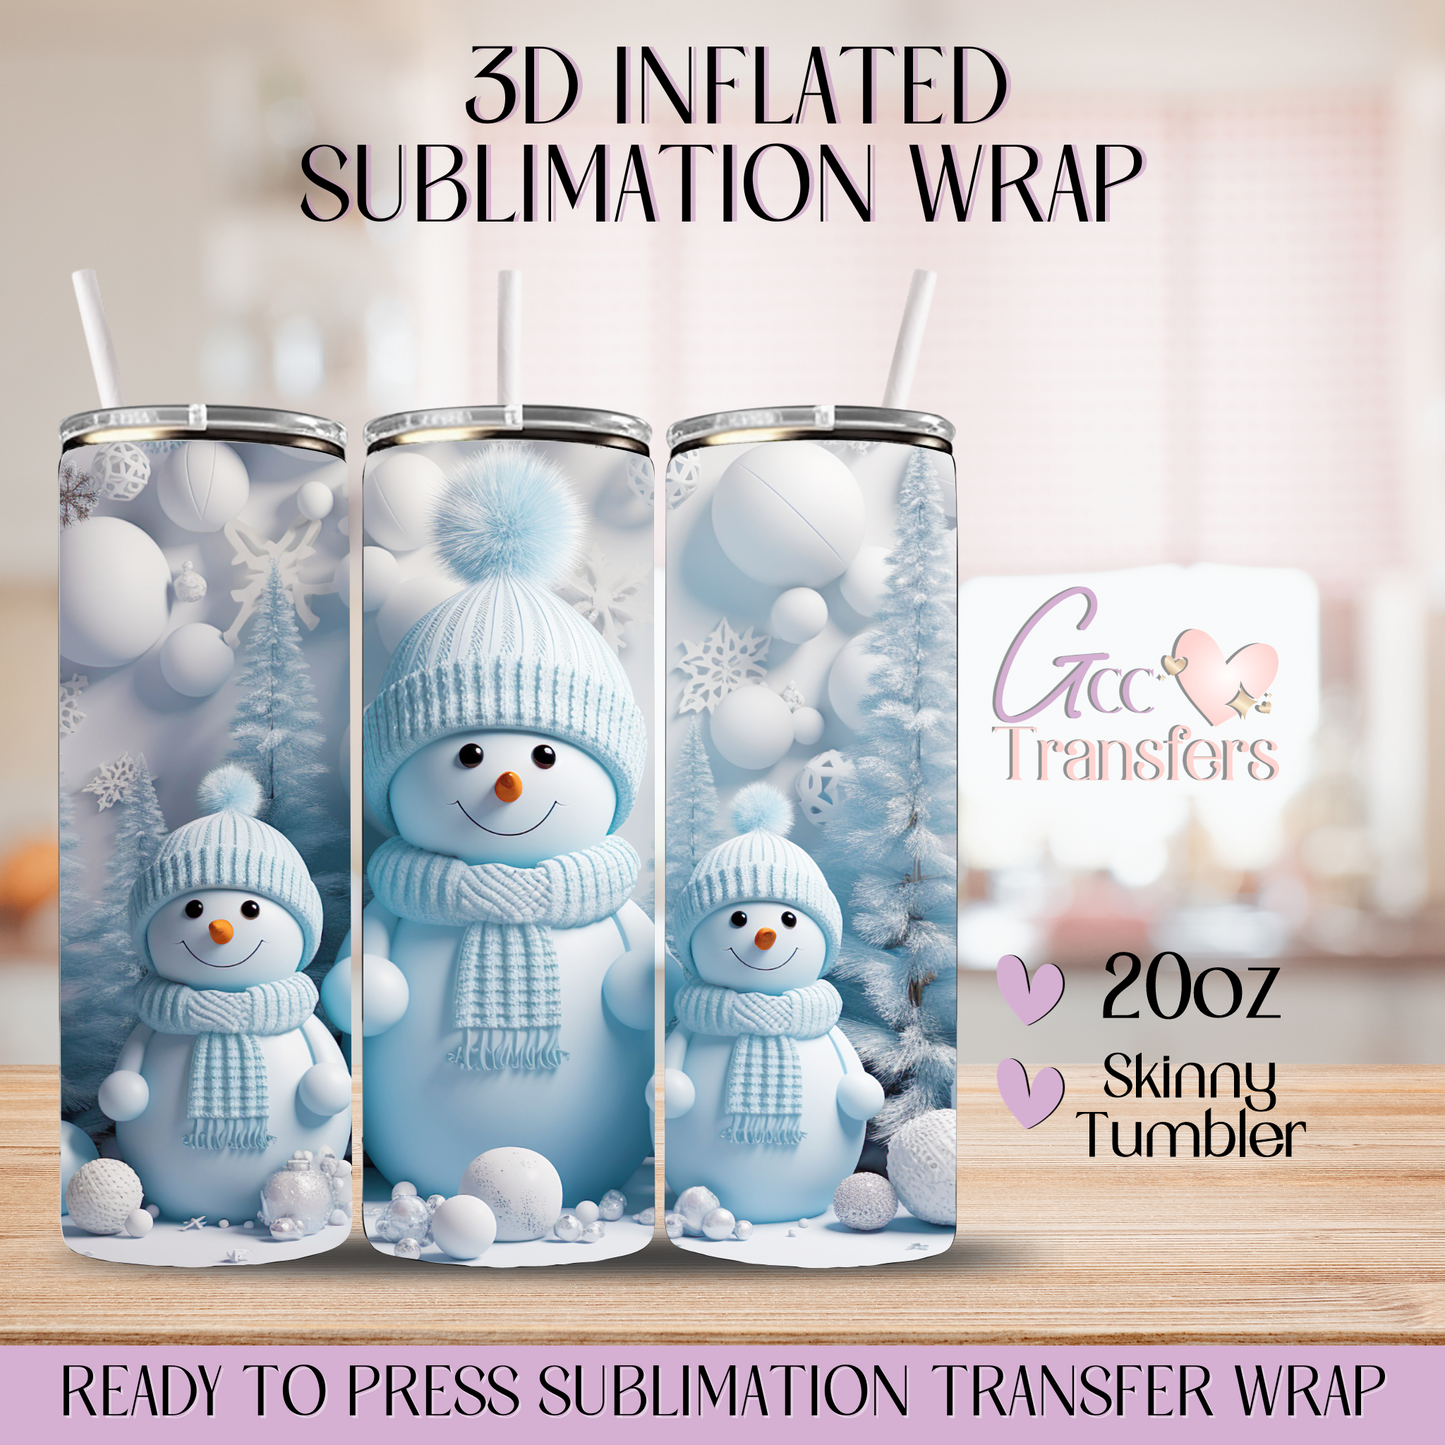 Blue Christmas Snowman - 20oz 3D Inflated Sublimation Wrap